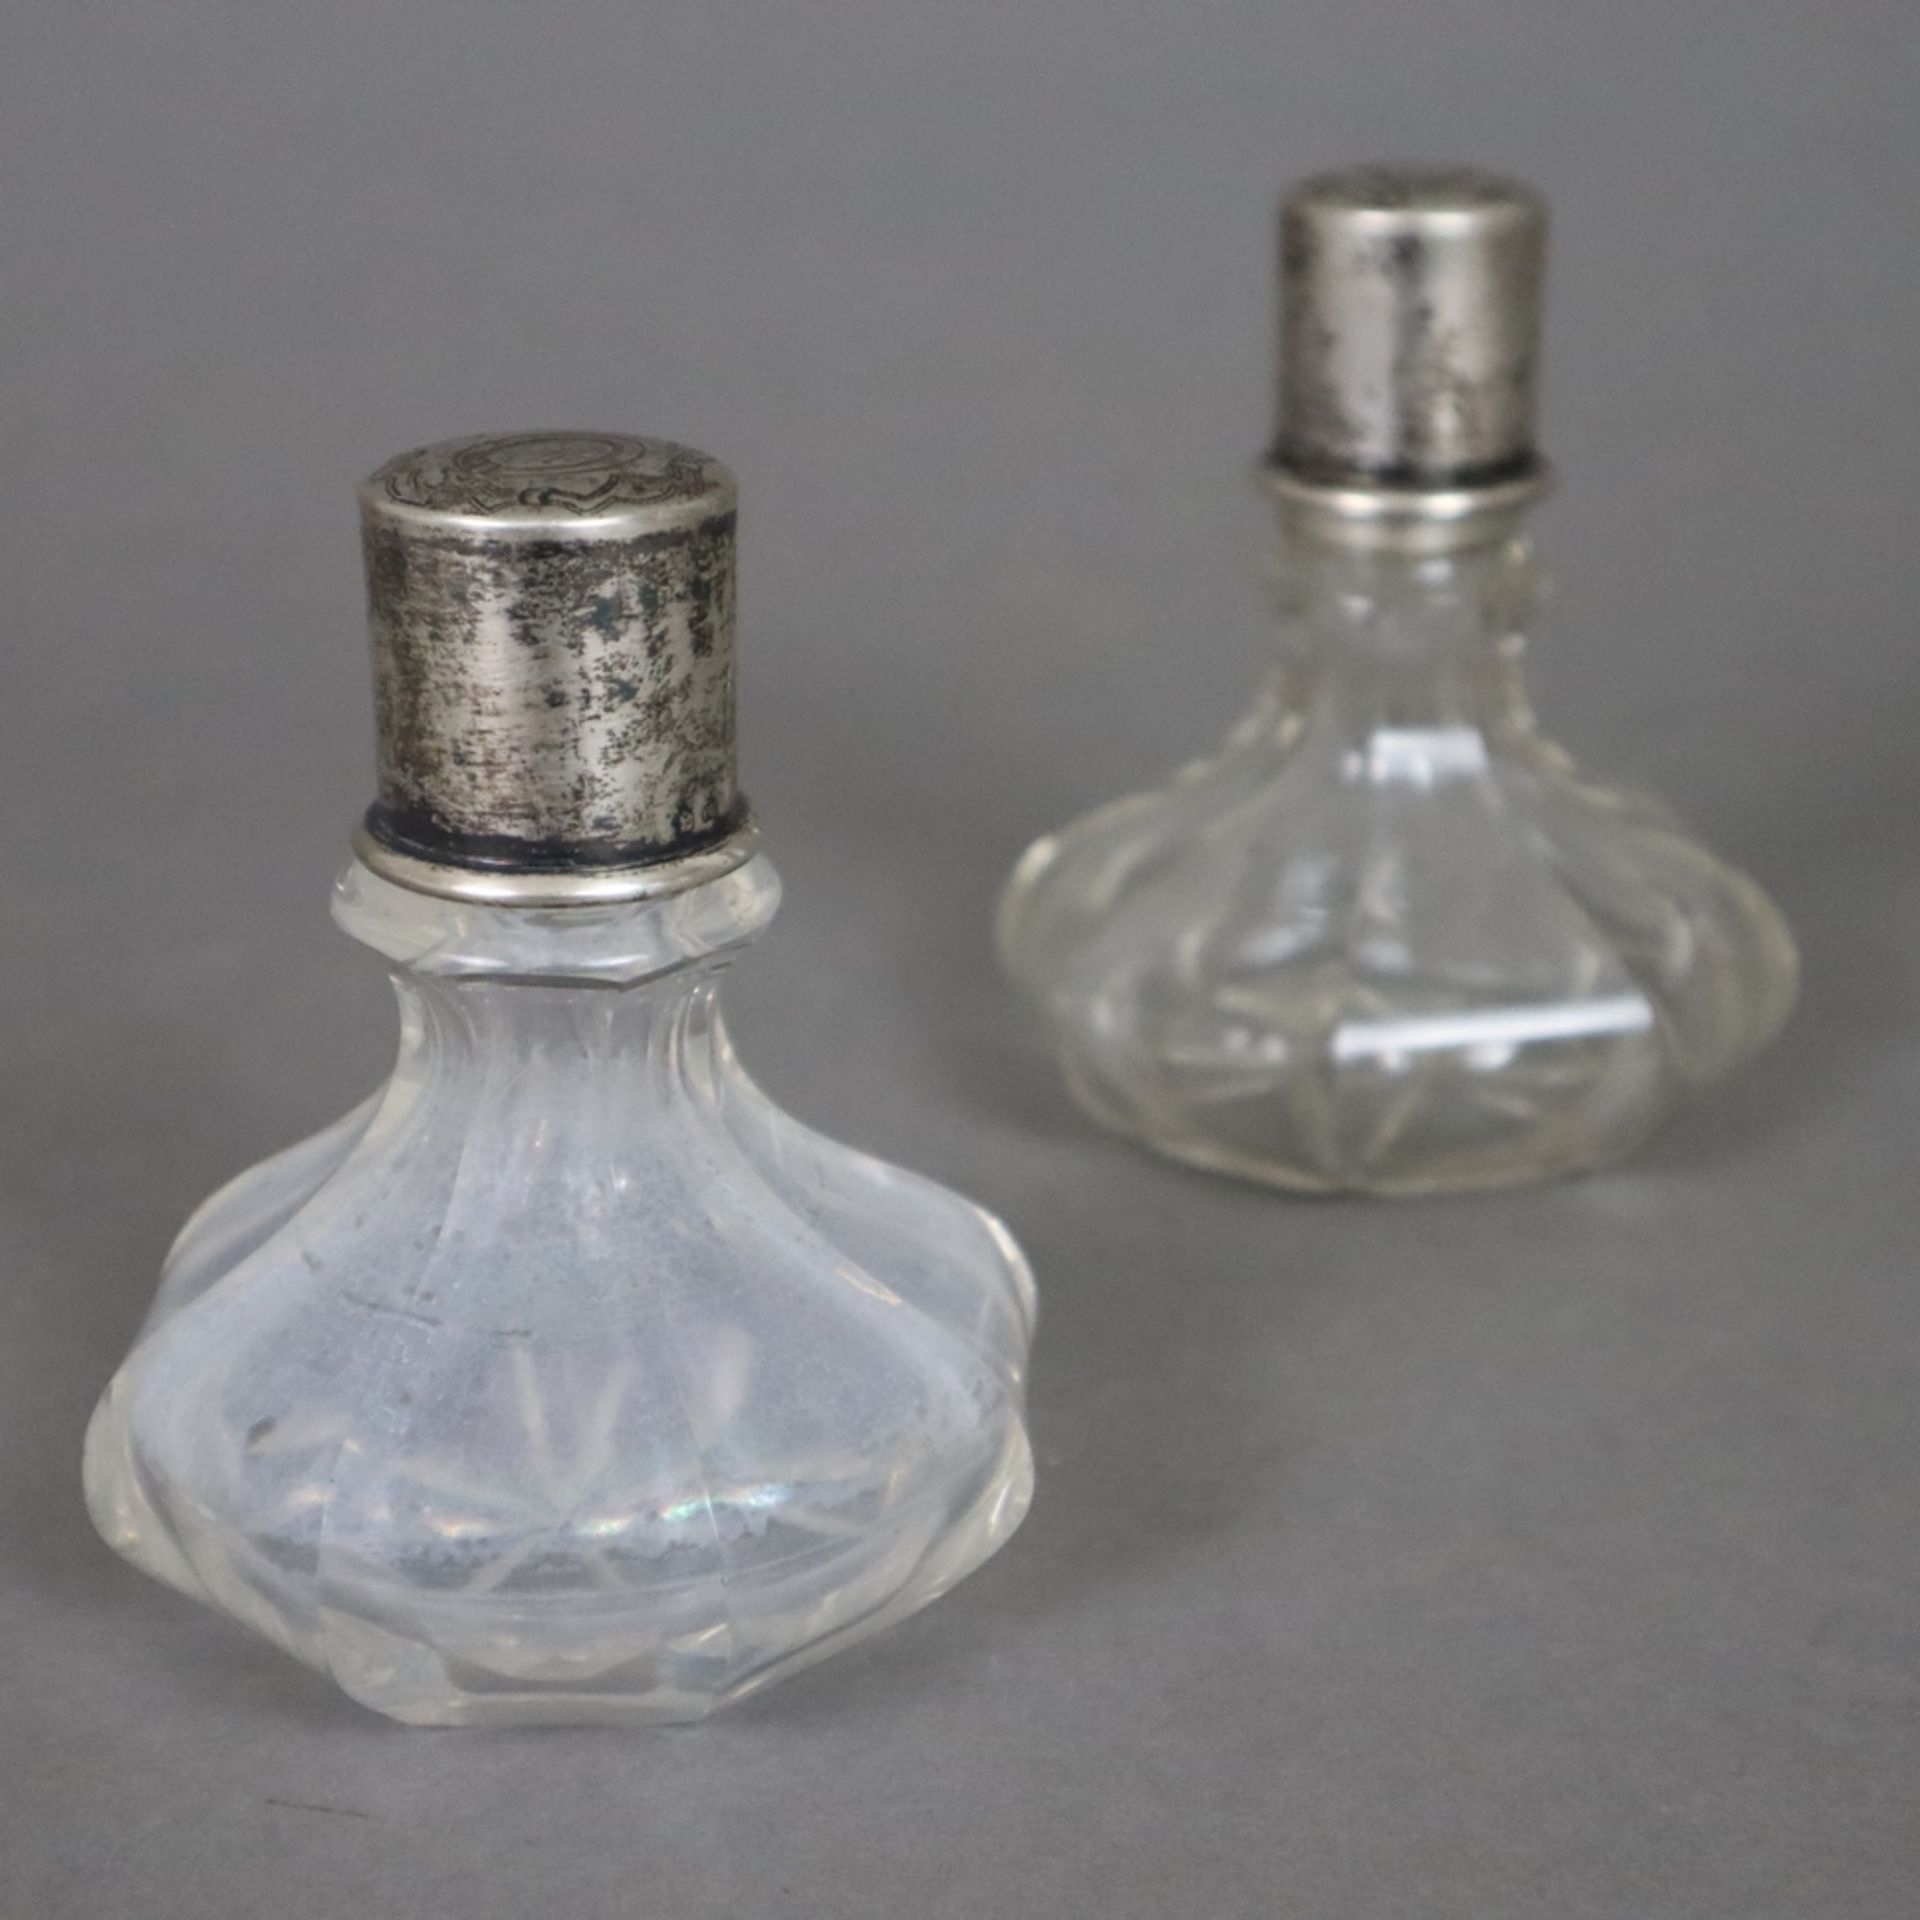 Drei Glasflakons mit Silbermontur - 2x Parfumflakons, wohl Österreich, farbloses Glas, achtfach fac - Image 5 of 10